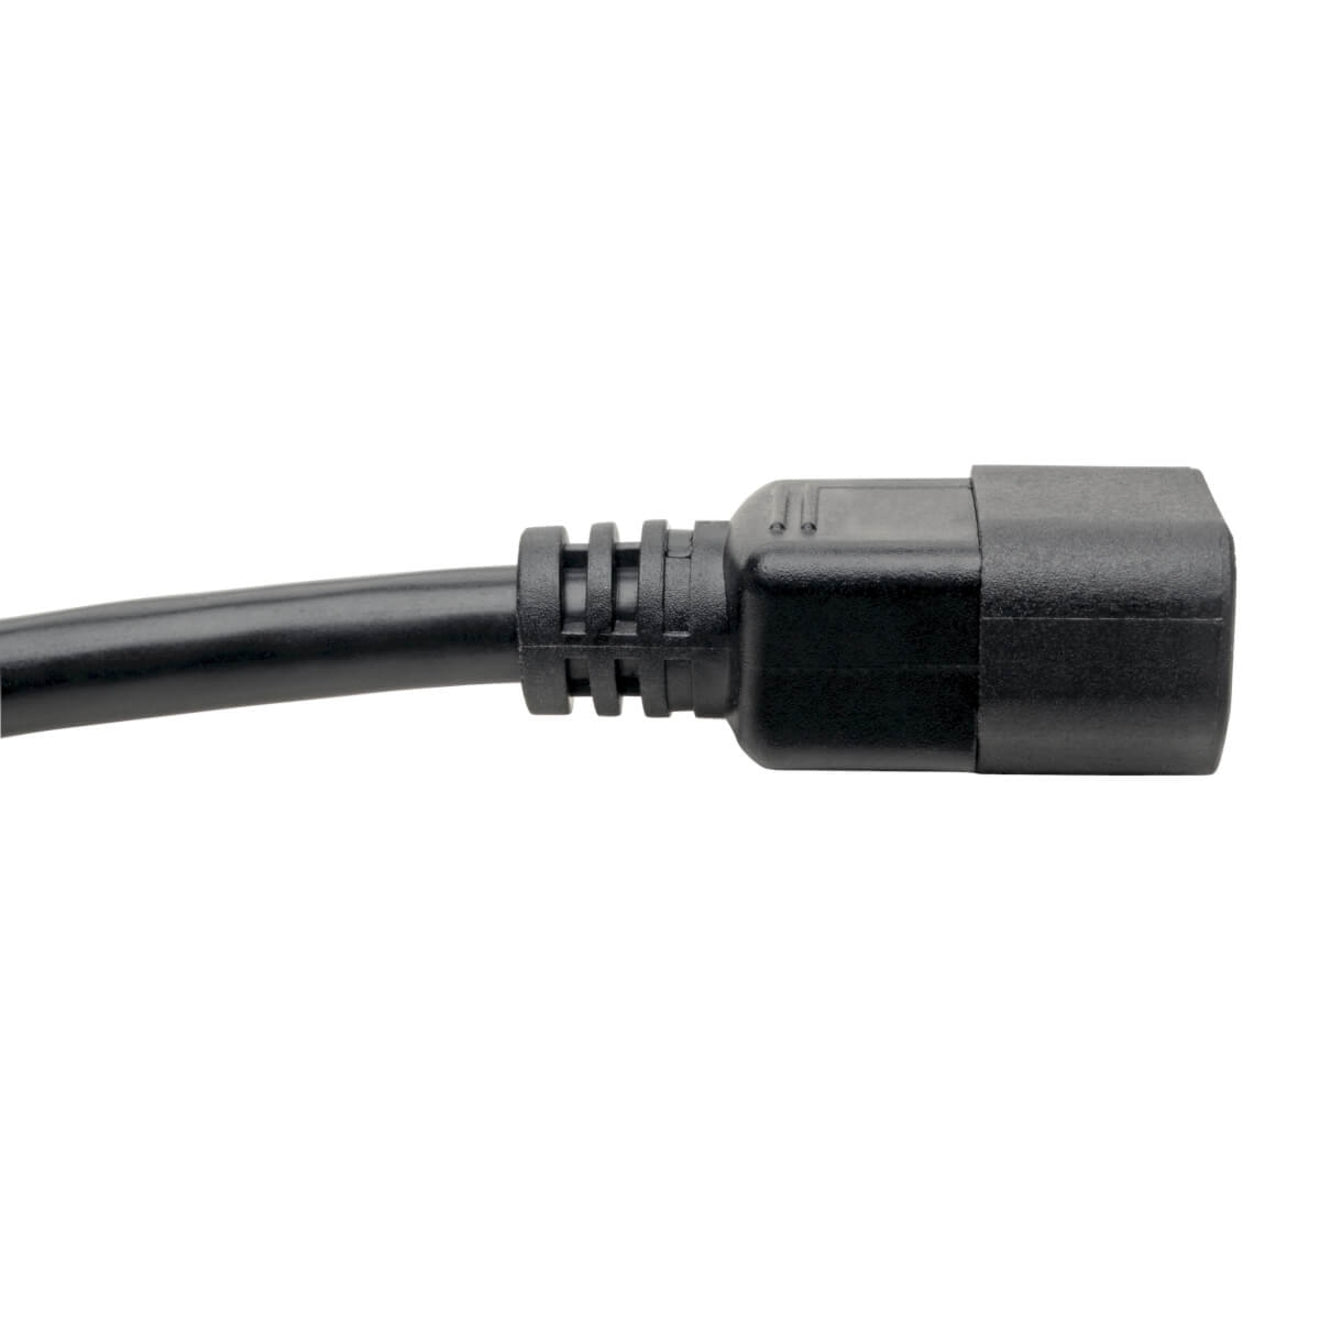 Tripp Lite P005-L06 Power Extension Cord, 6 ft, Black